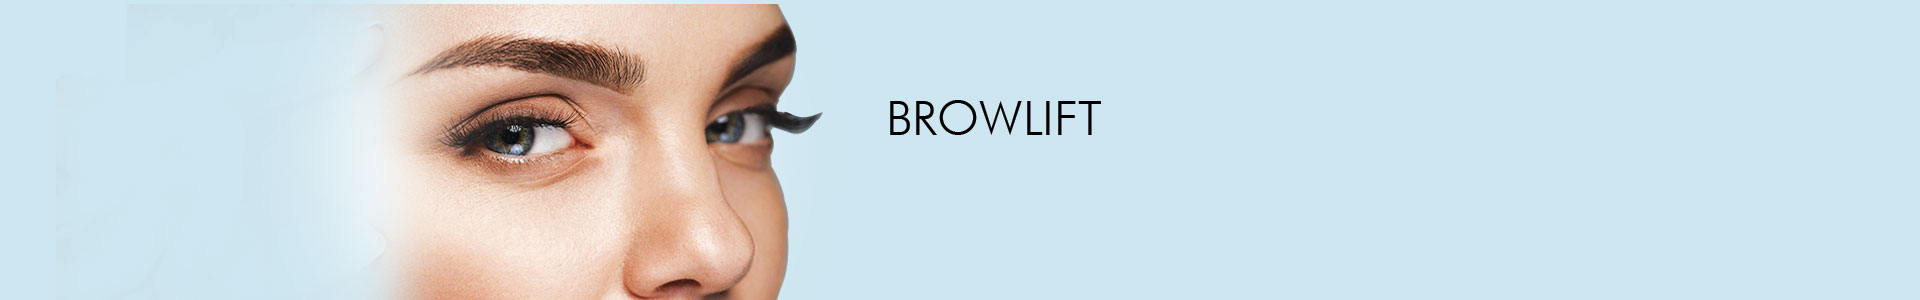 Browlift